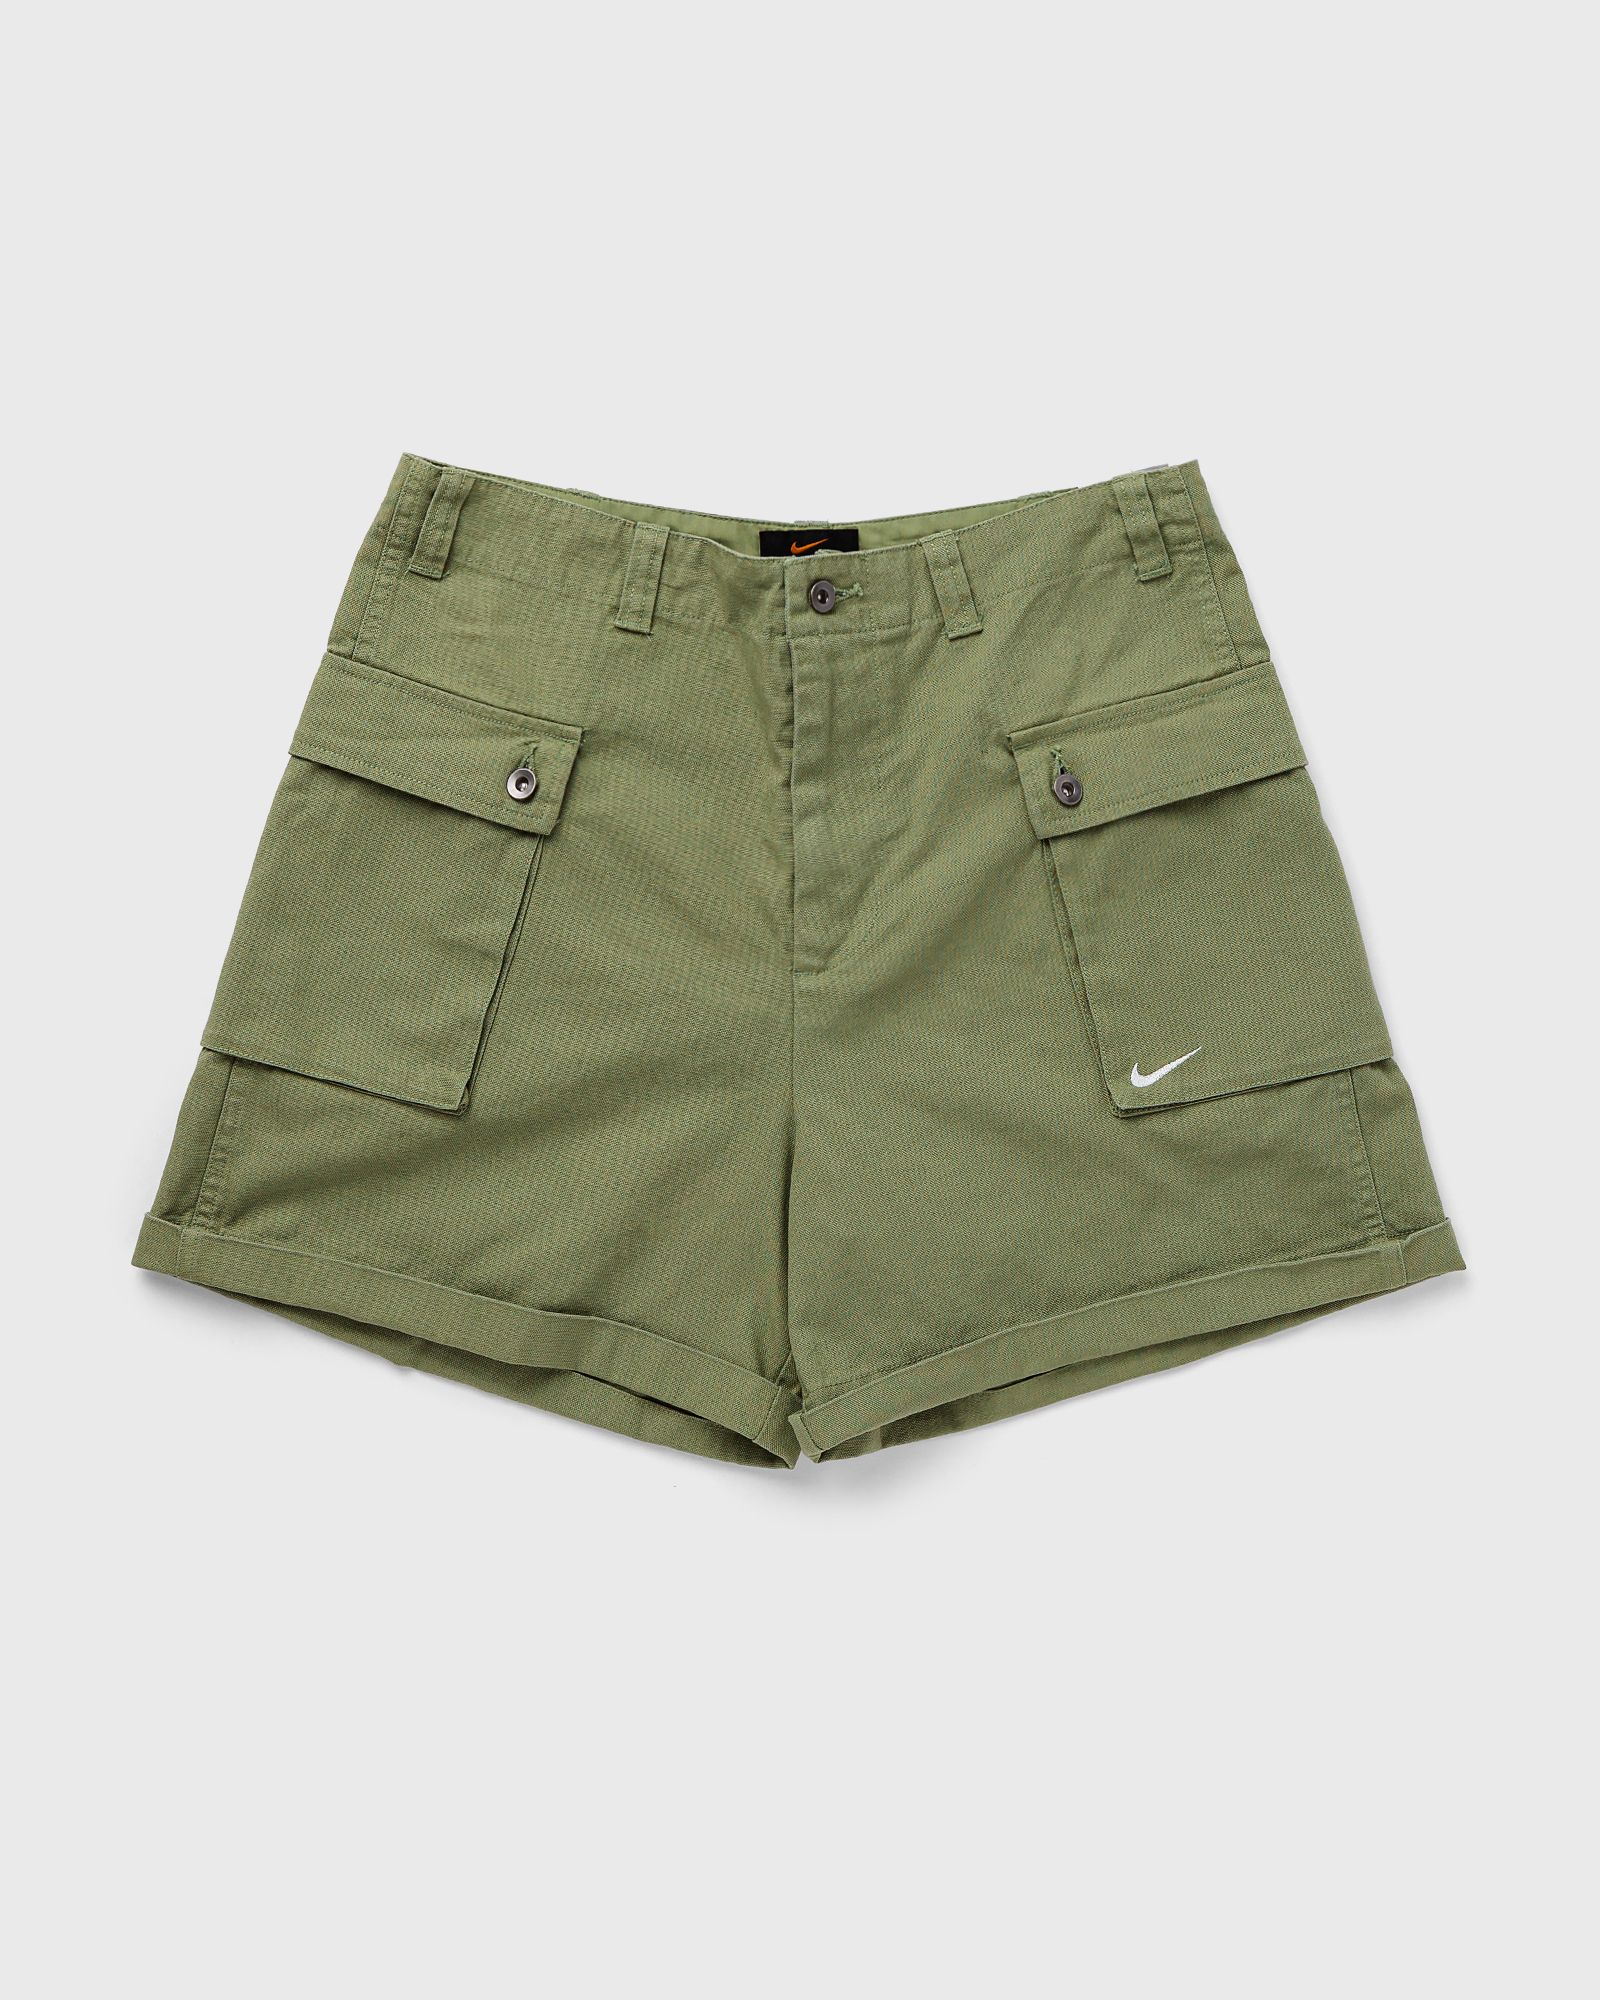 Nike - woven p44 cargo shorts men cargo shorts green in größe:m